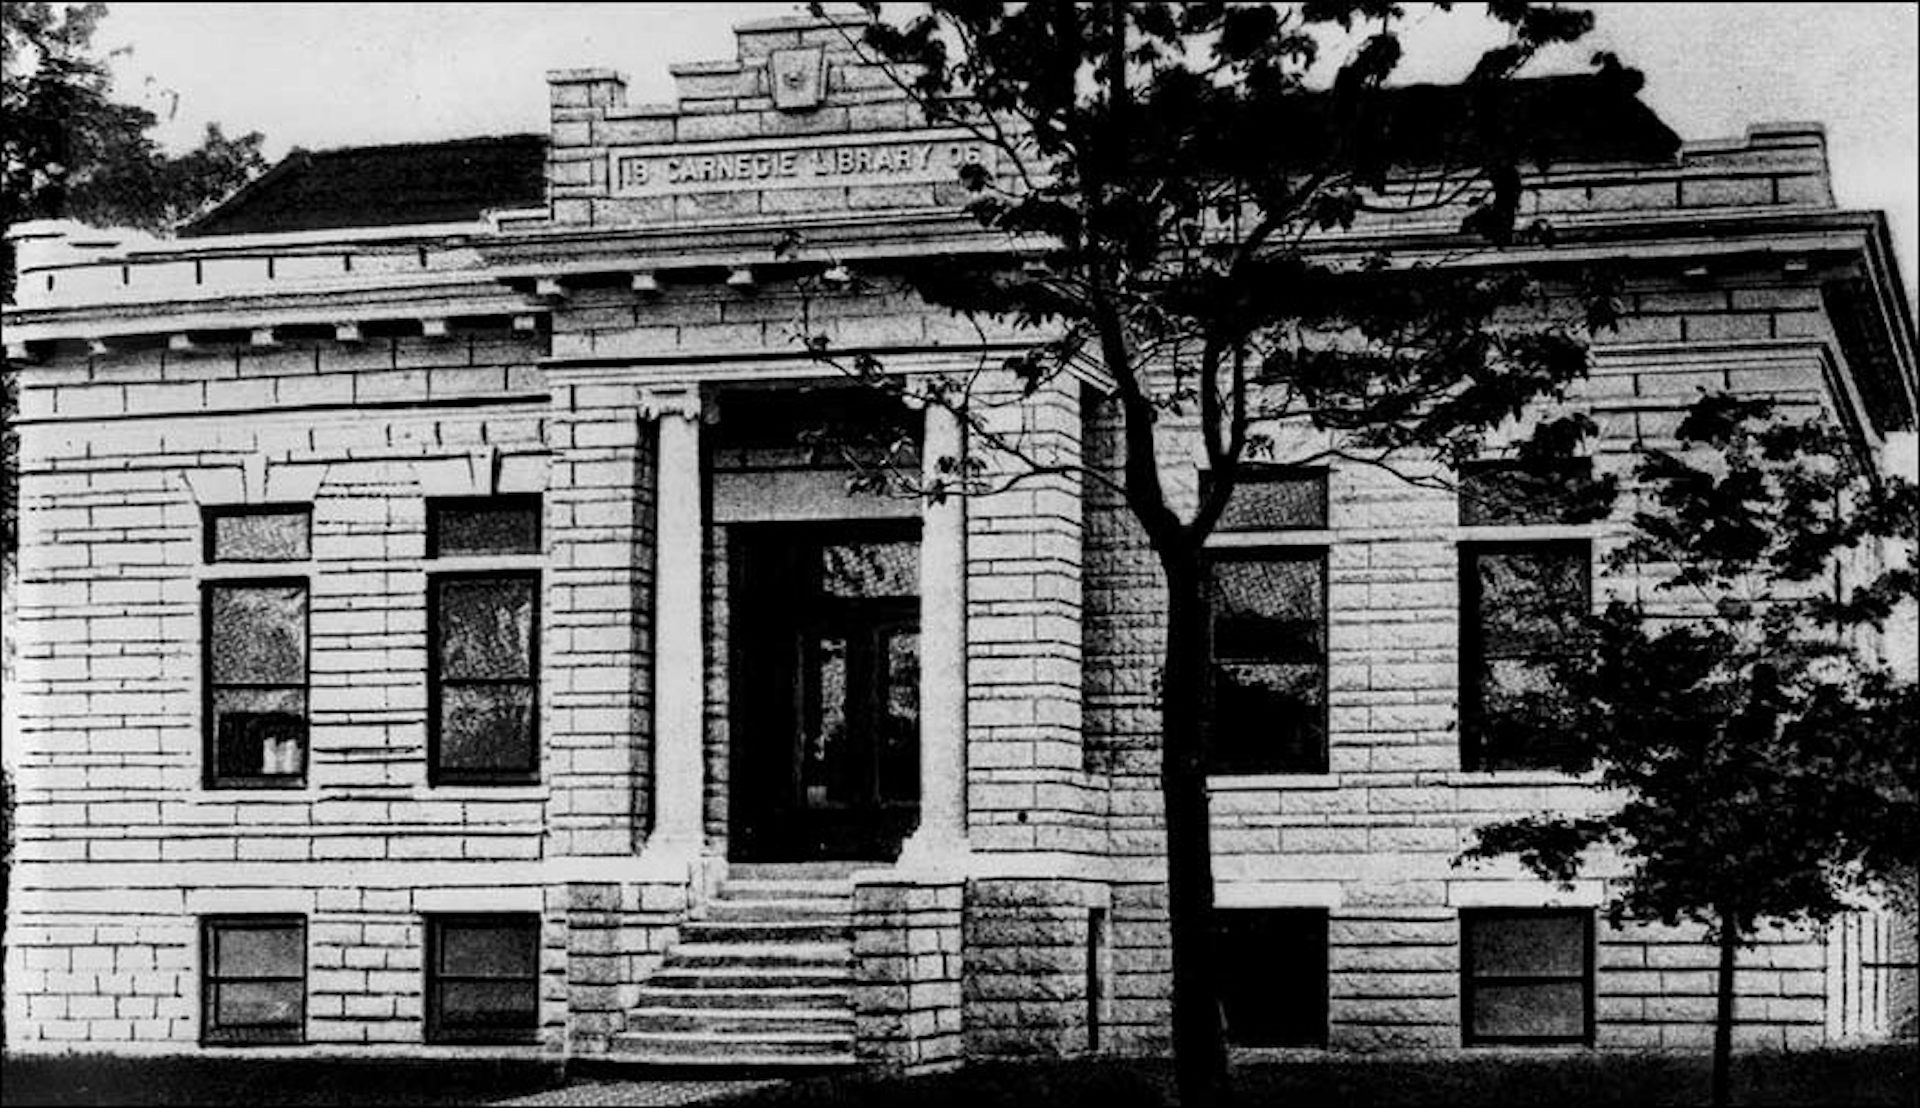 Carnegie Libraries Across America A Public Legacy